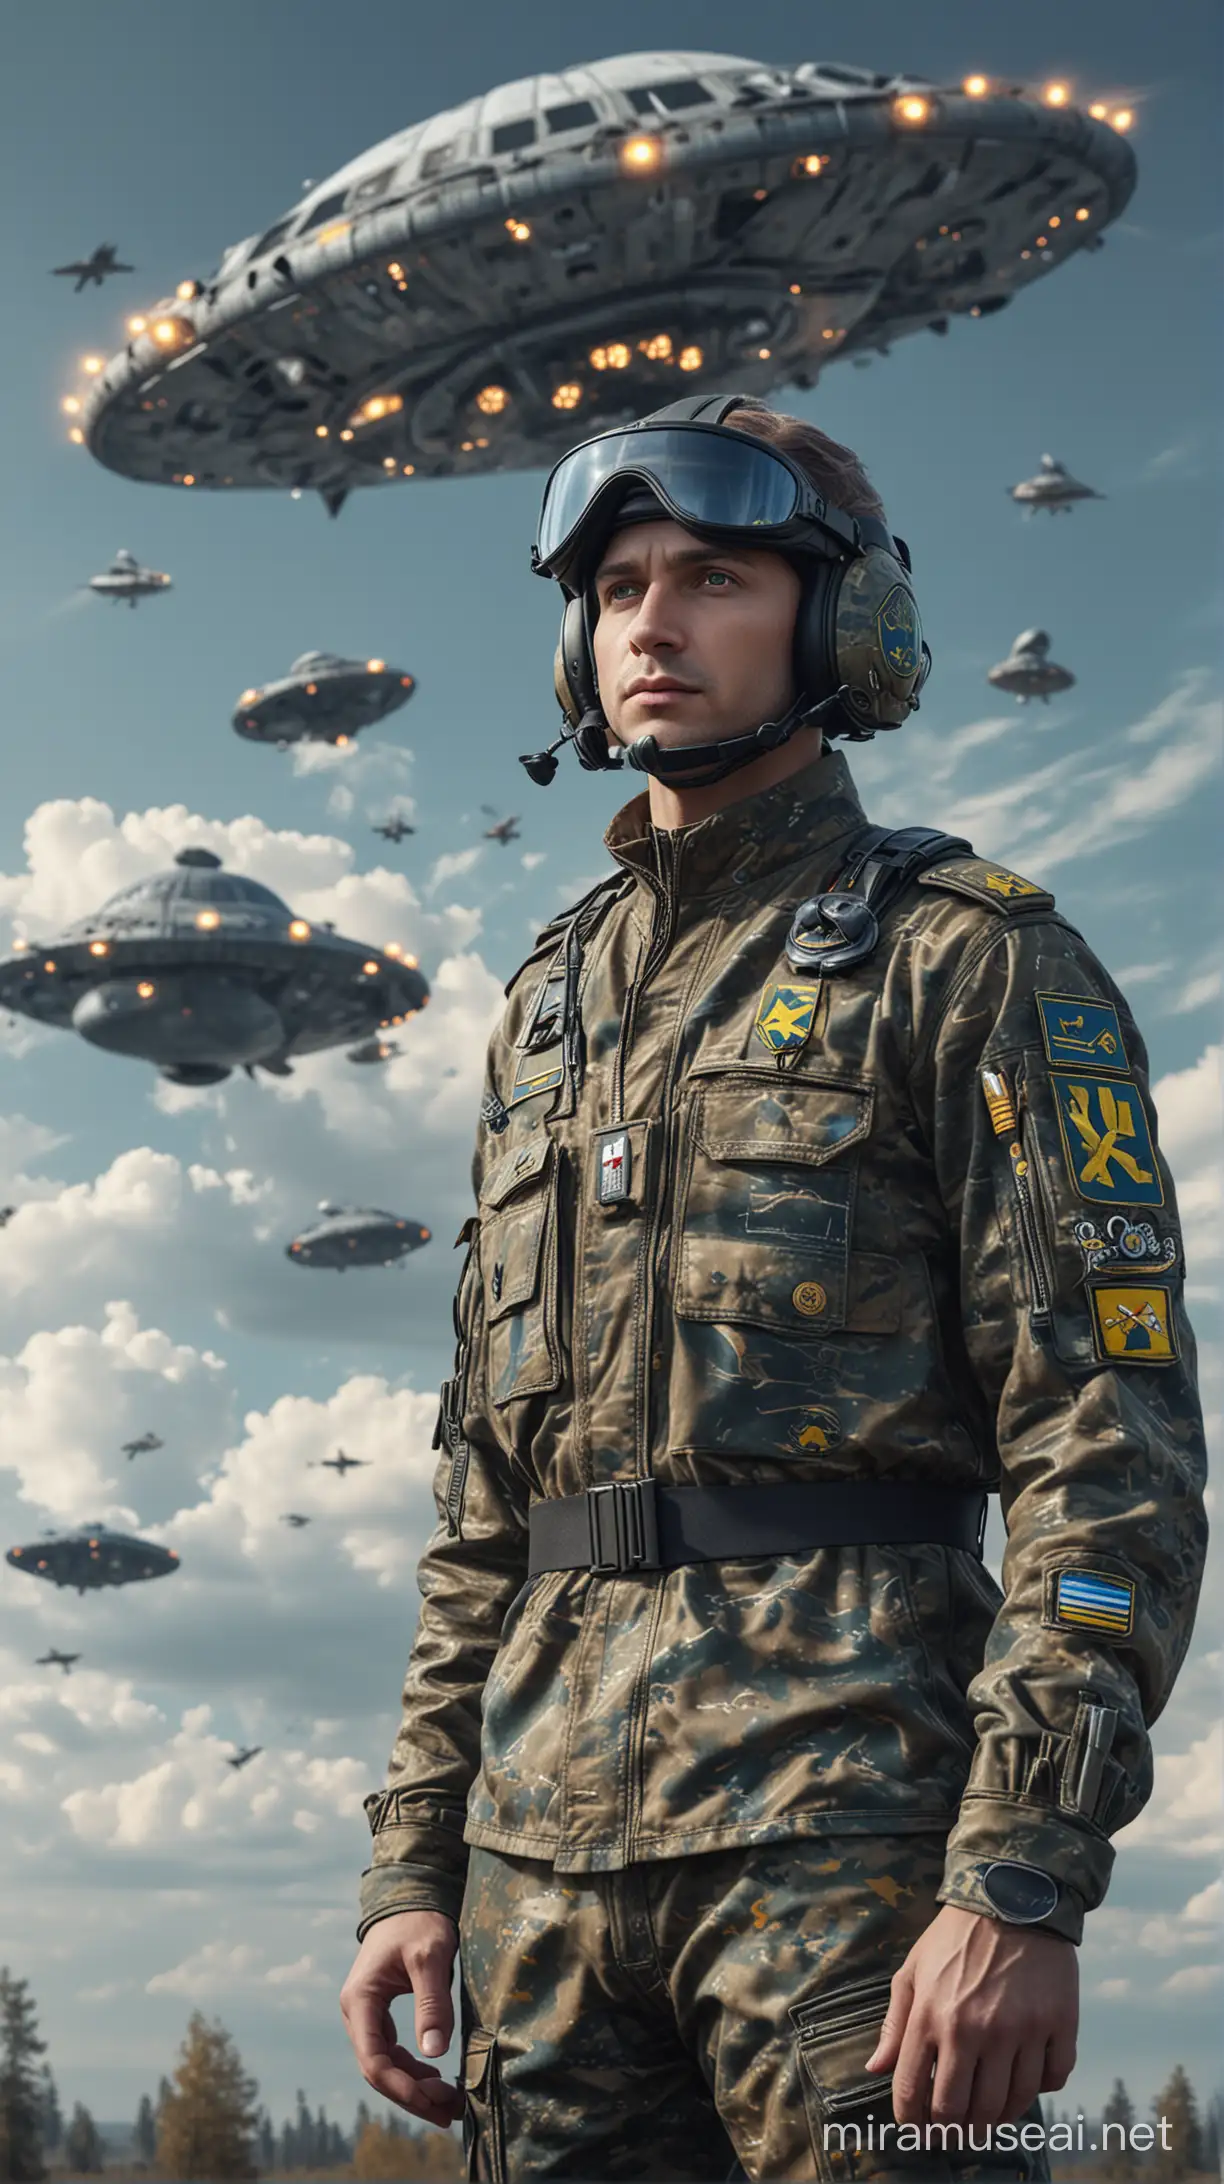 Ukrainian Pilot in Camouflage Uniform Encounters UFO in HyperRealistic 8K Image